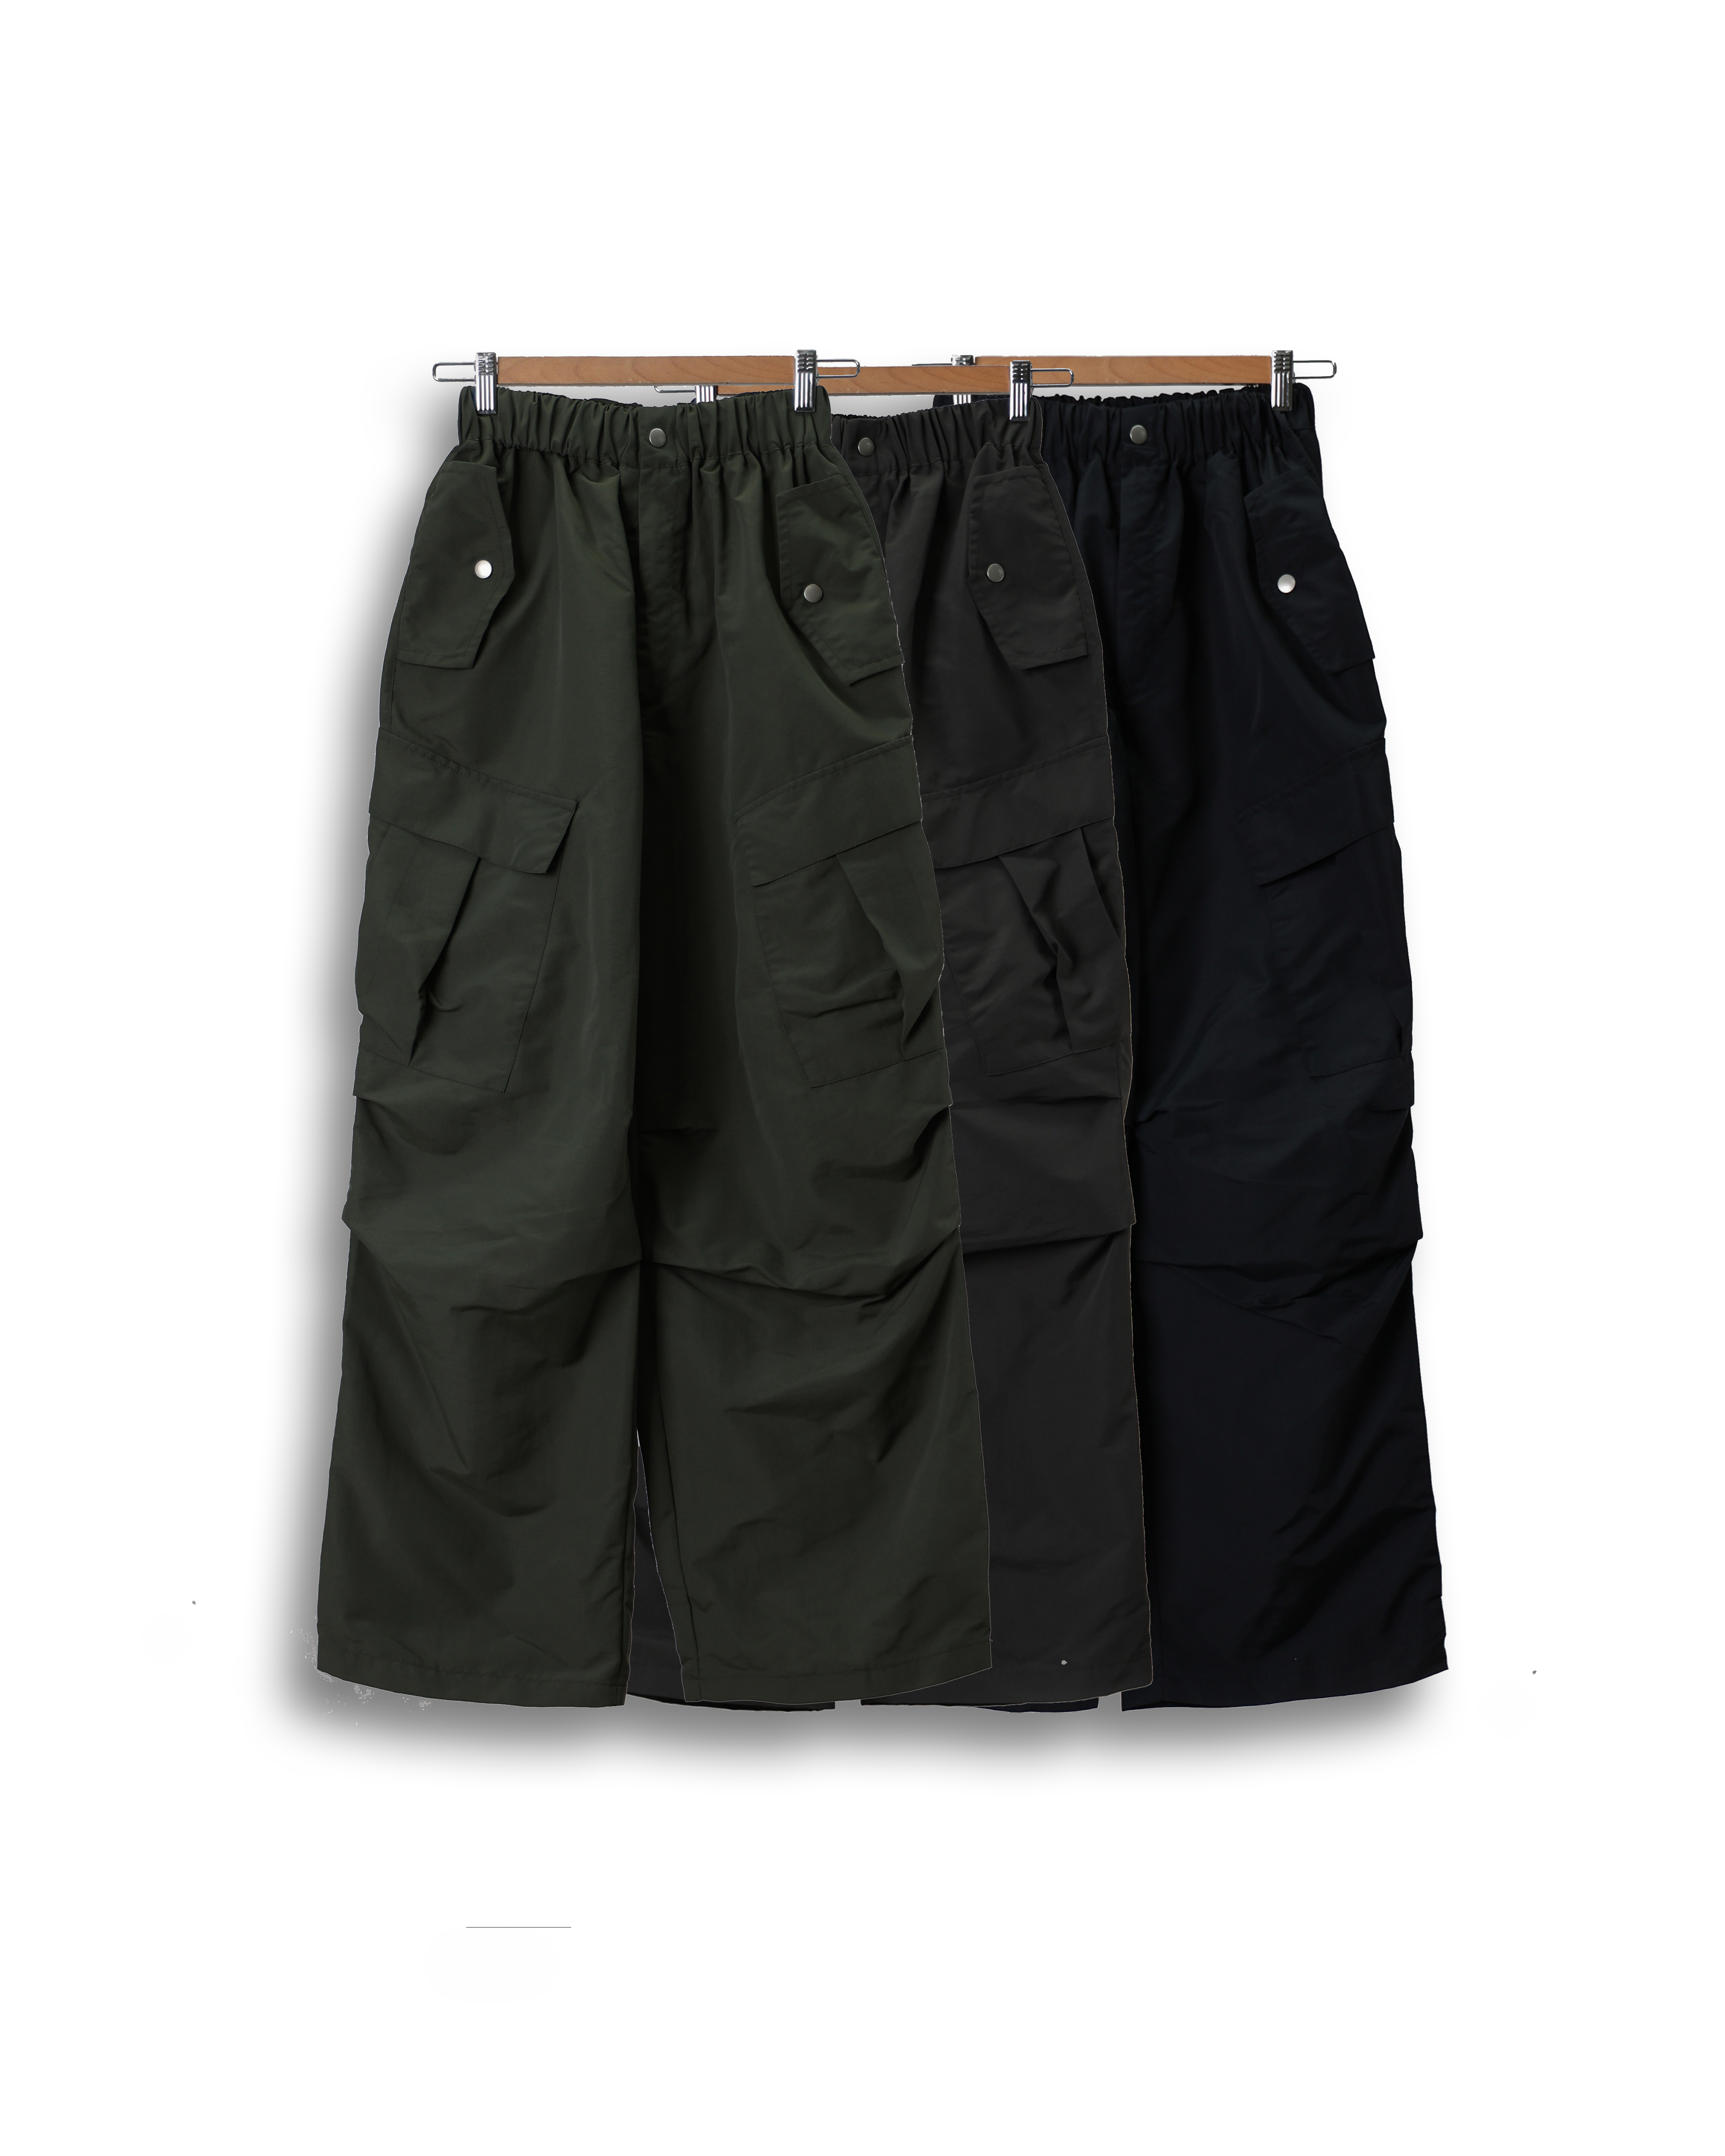 MILI Mail Nylon Cargo Para Pocket Pants (Black/Charcoal/Olive)